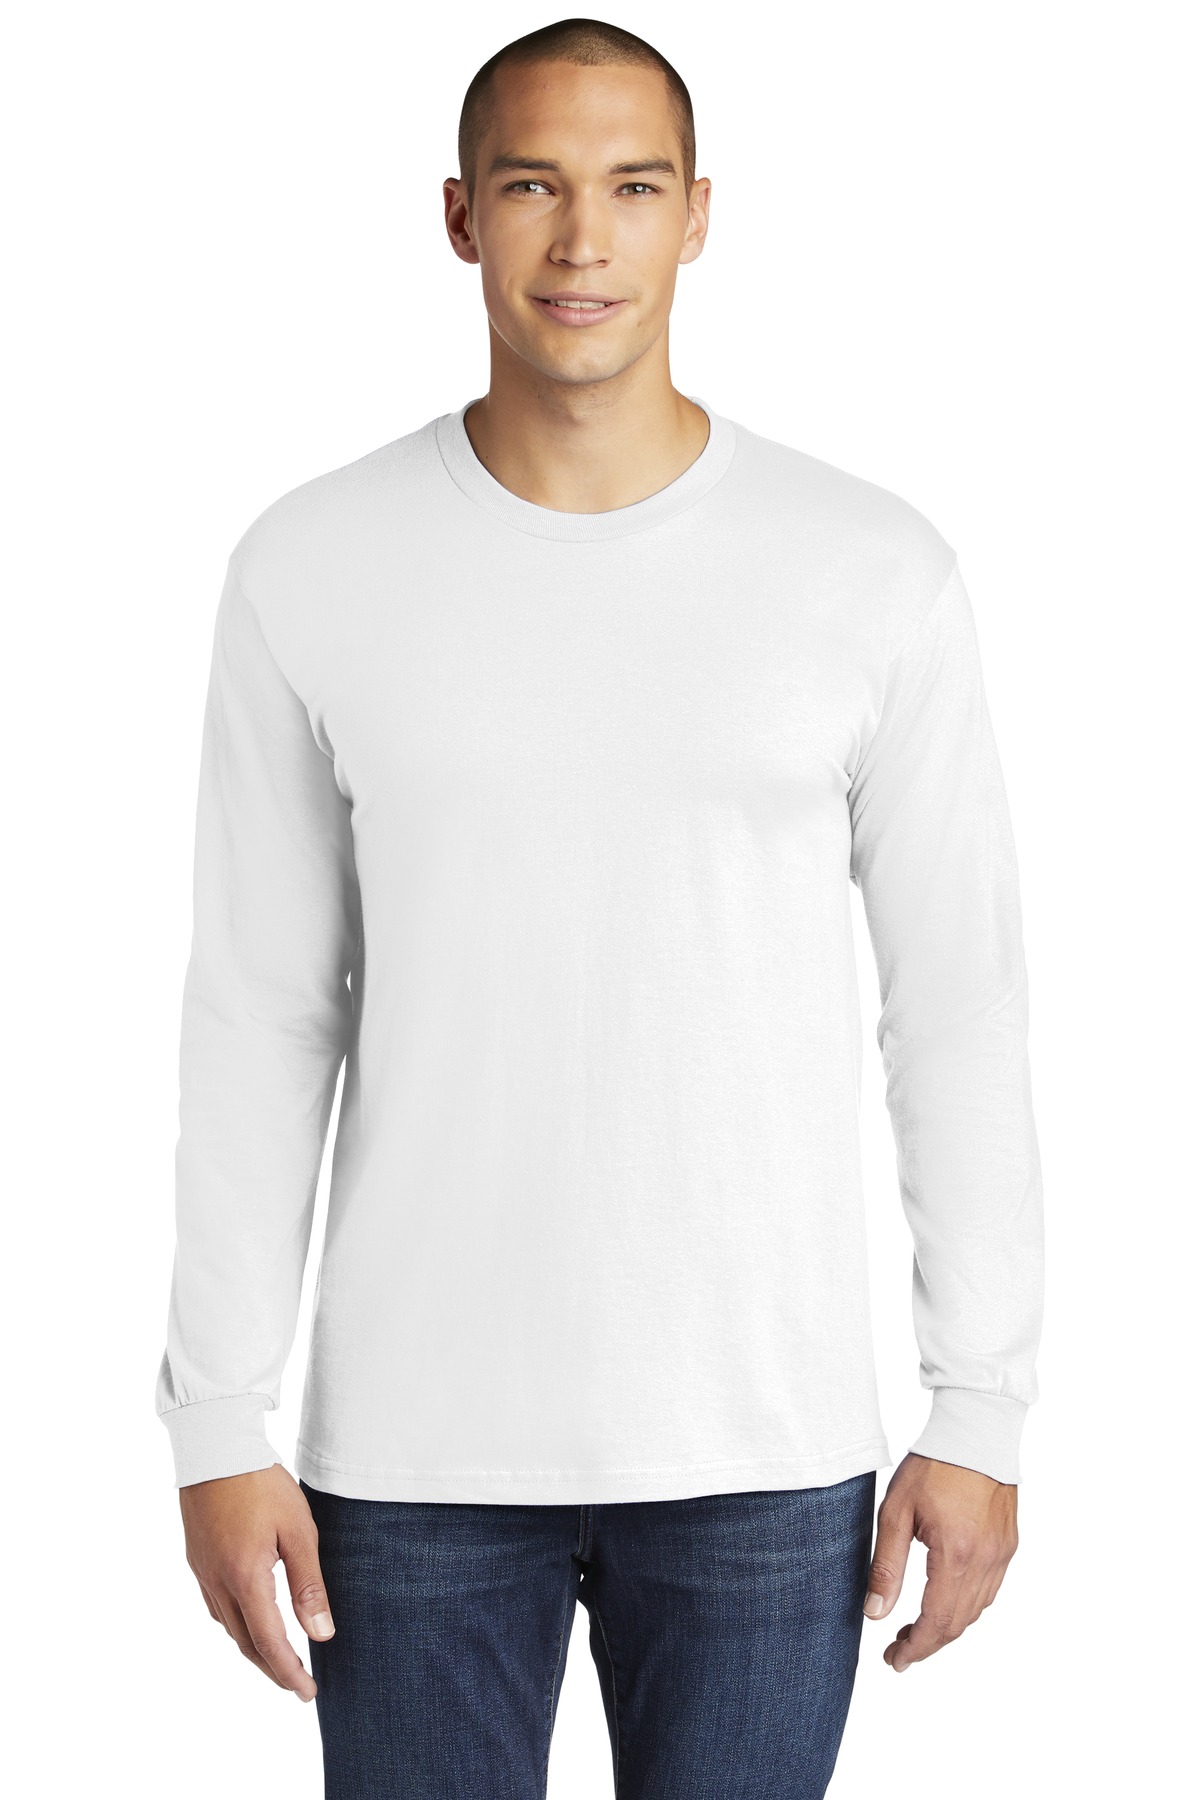 Gildan T-Shirts for Corporate Hospitality Hammer Long Sleeve T-Shirt.-Gildan